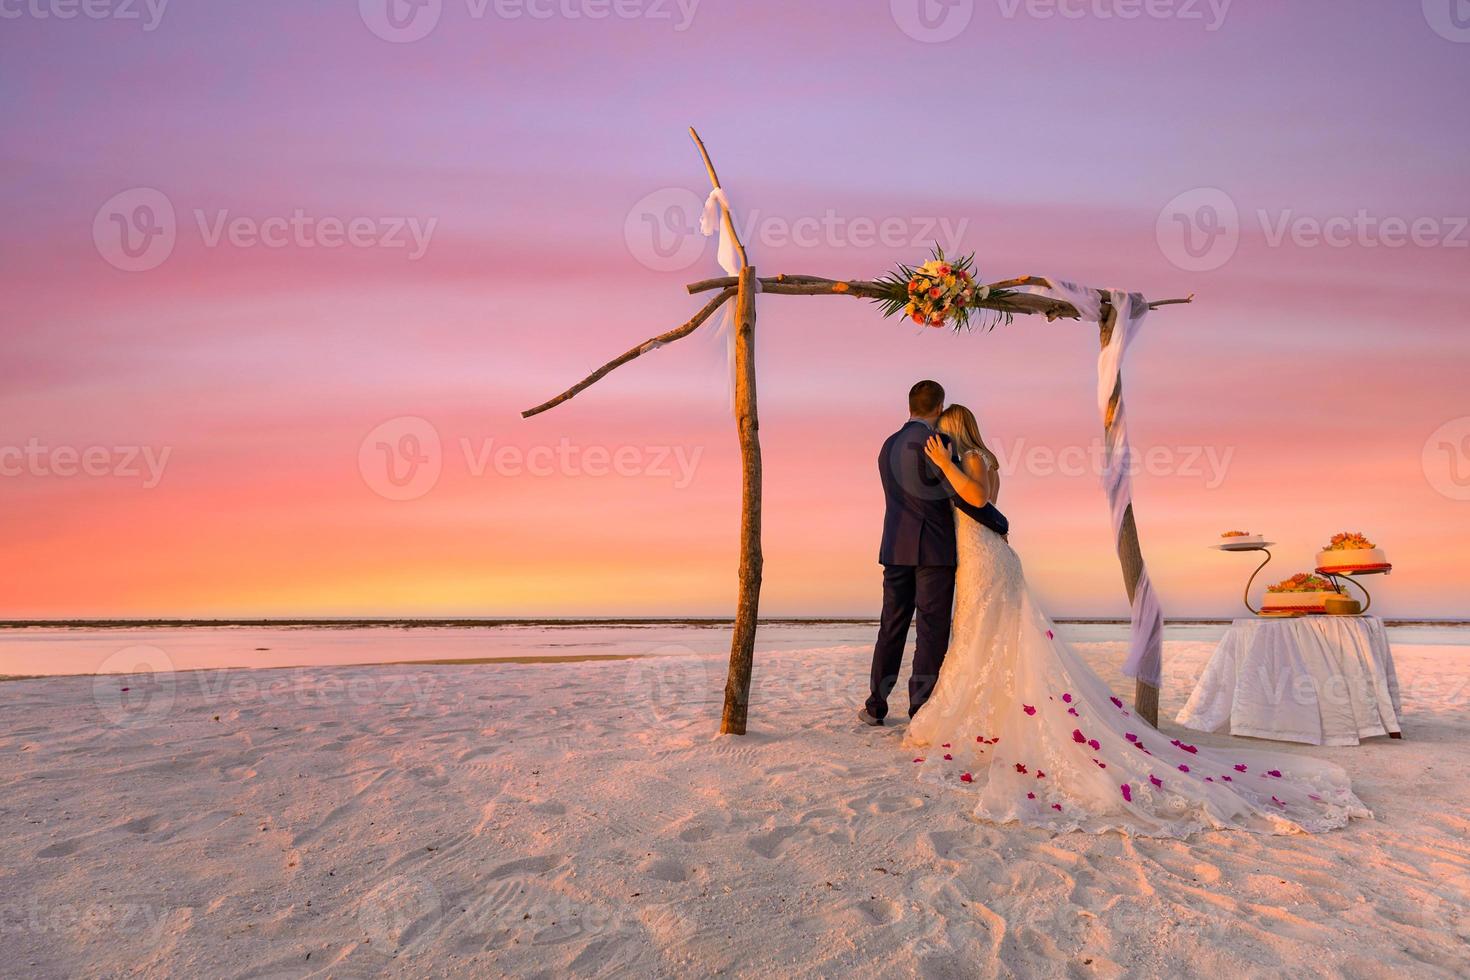 The bride and groom under wedding arch on beach. Romantic wedding background. Amazing beach sunset, infinity sea view, romantic clouds sky. Idyllic destination honeymoon photo